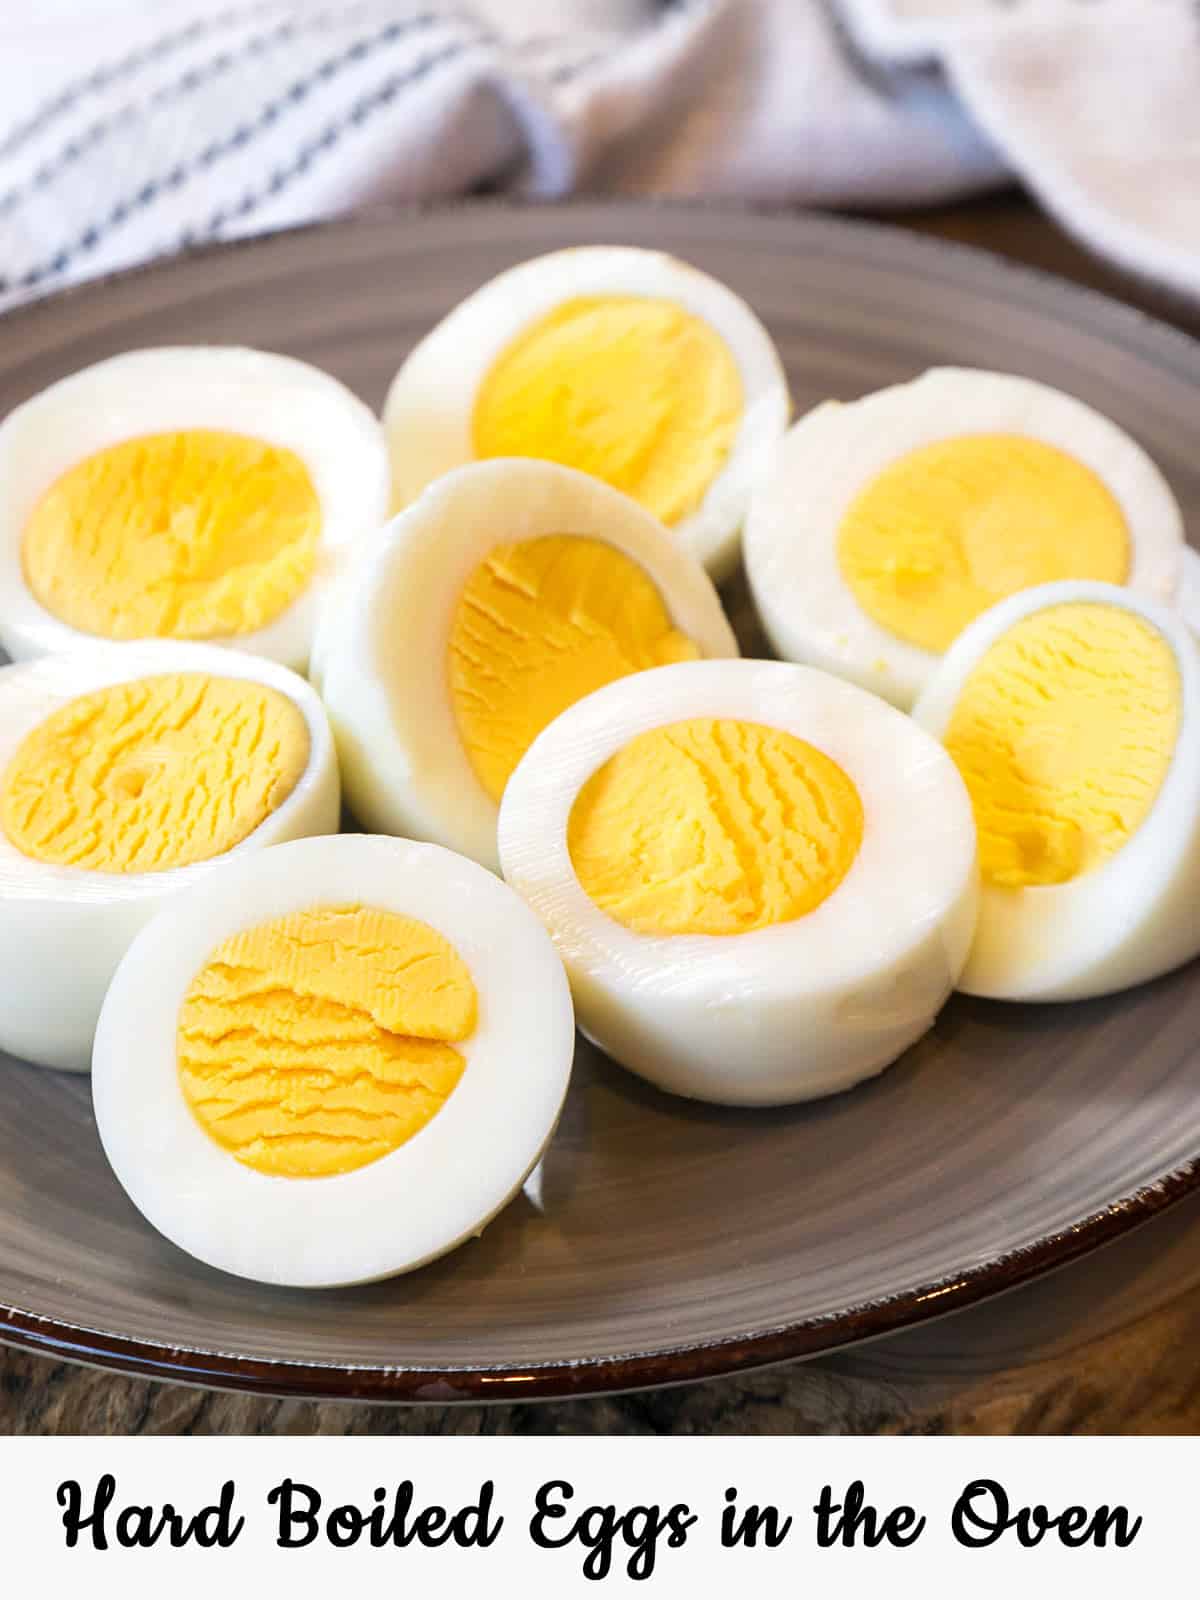 Hard-boiled eggs sliced in half.